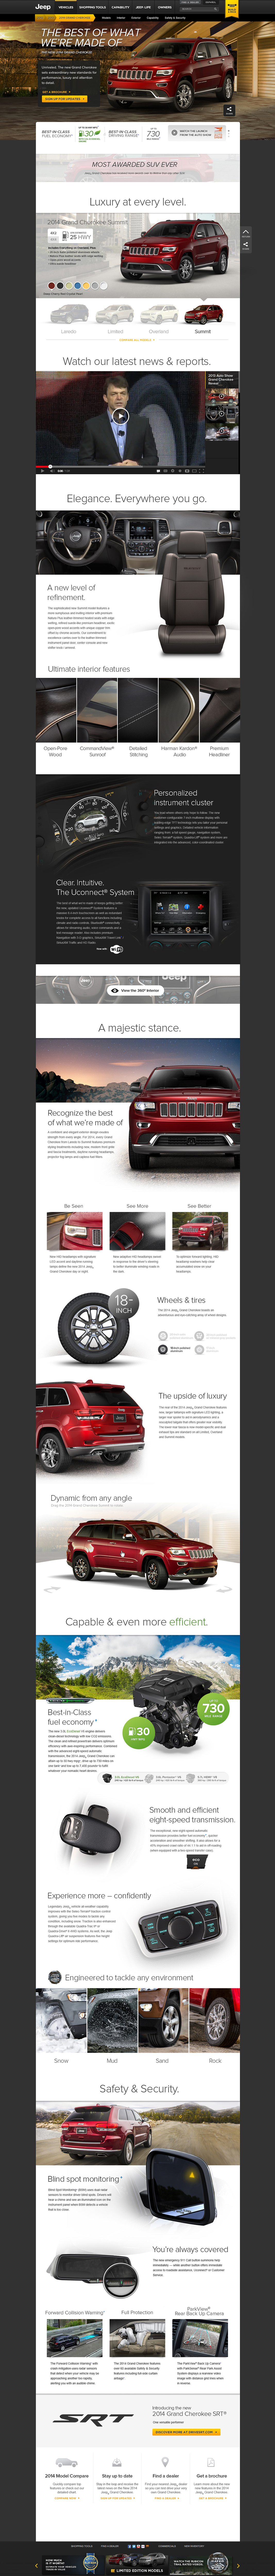 Adobe Portfolio jeep Grand Cherokee cherokee compass Liberty patriot Wrangler wrangler unlimited automotive   vehicles experience design